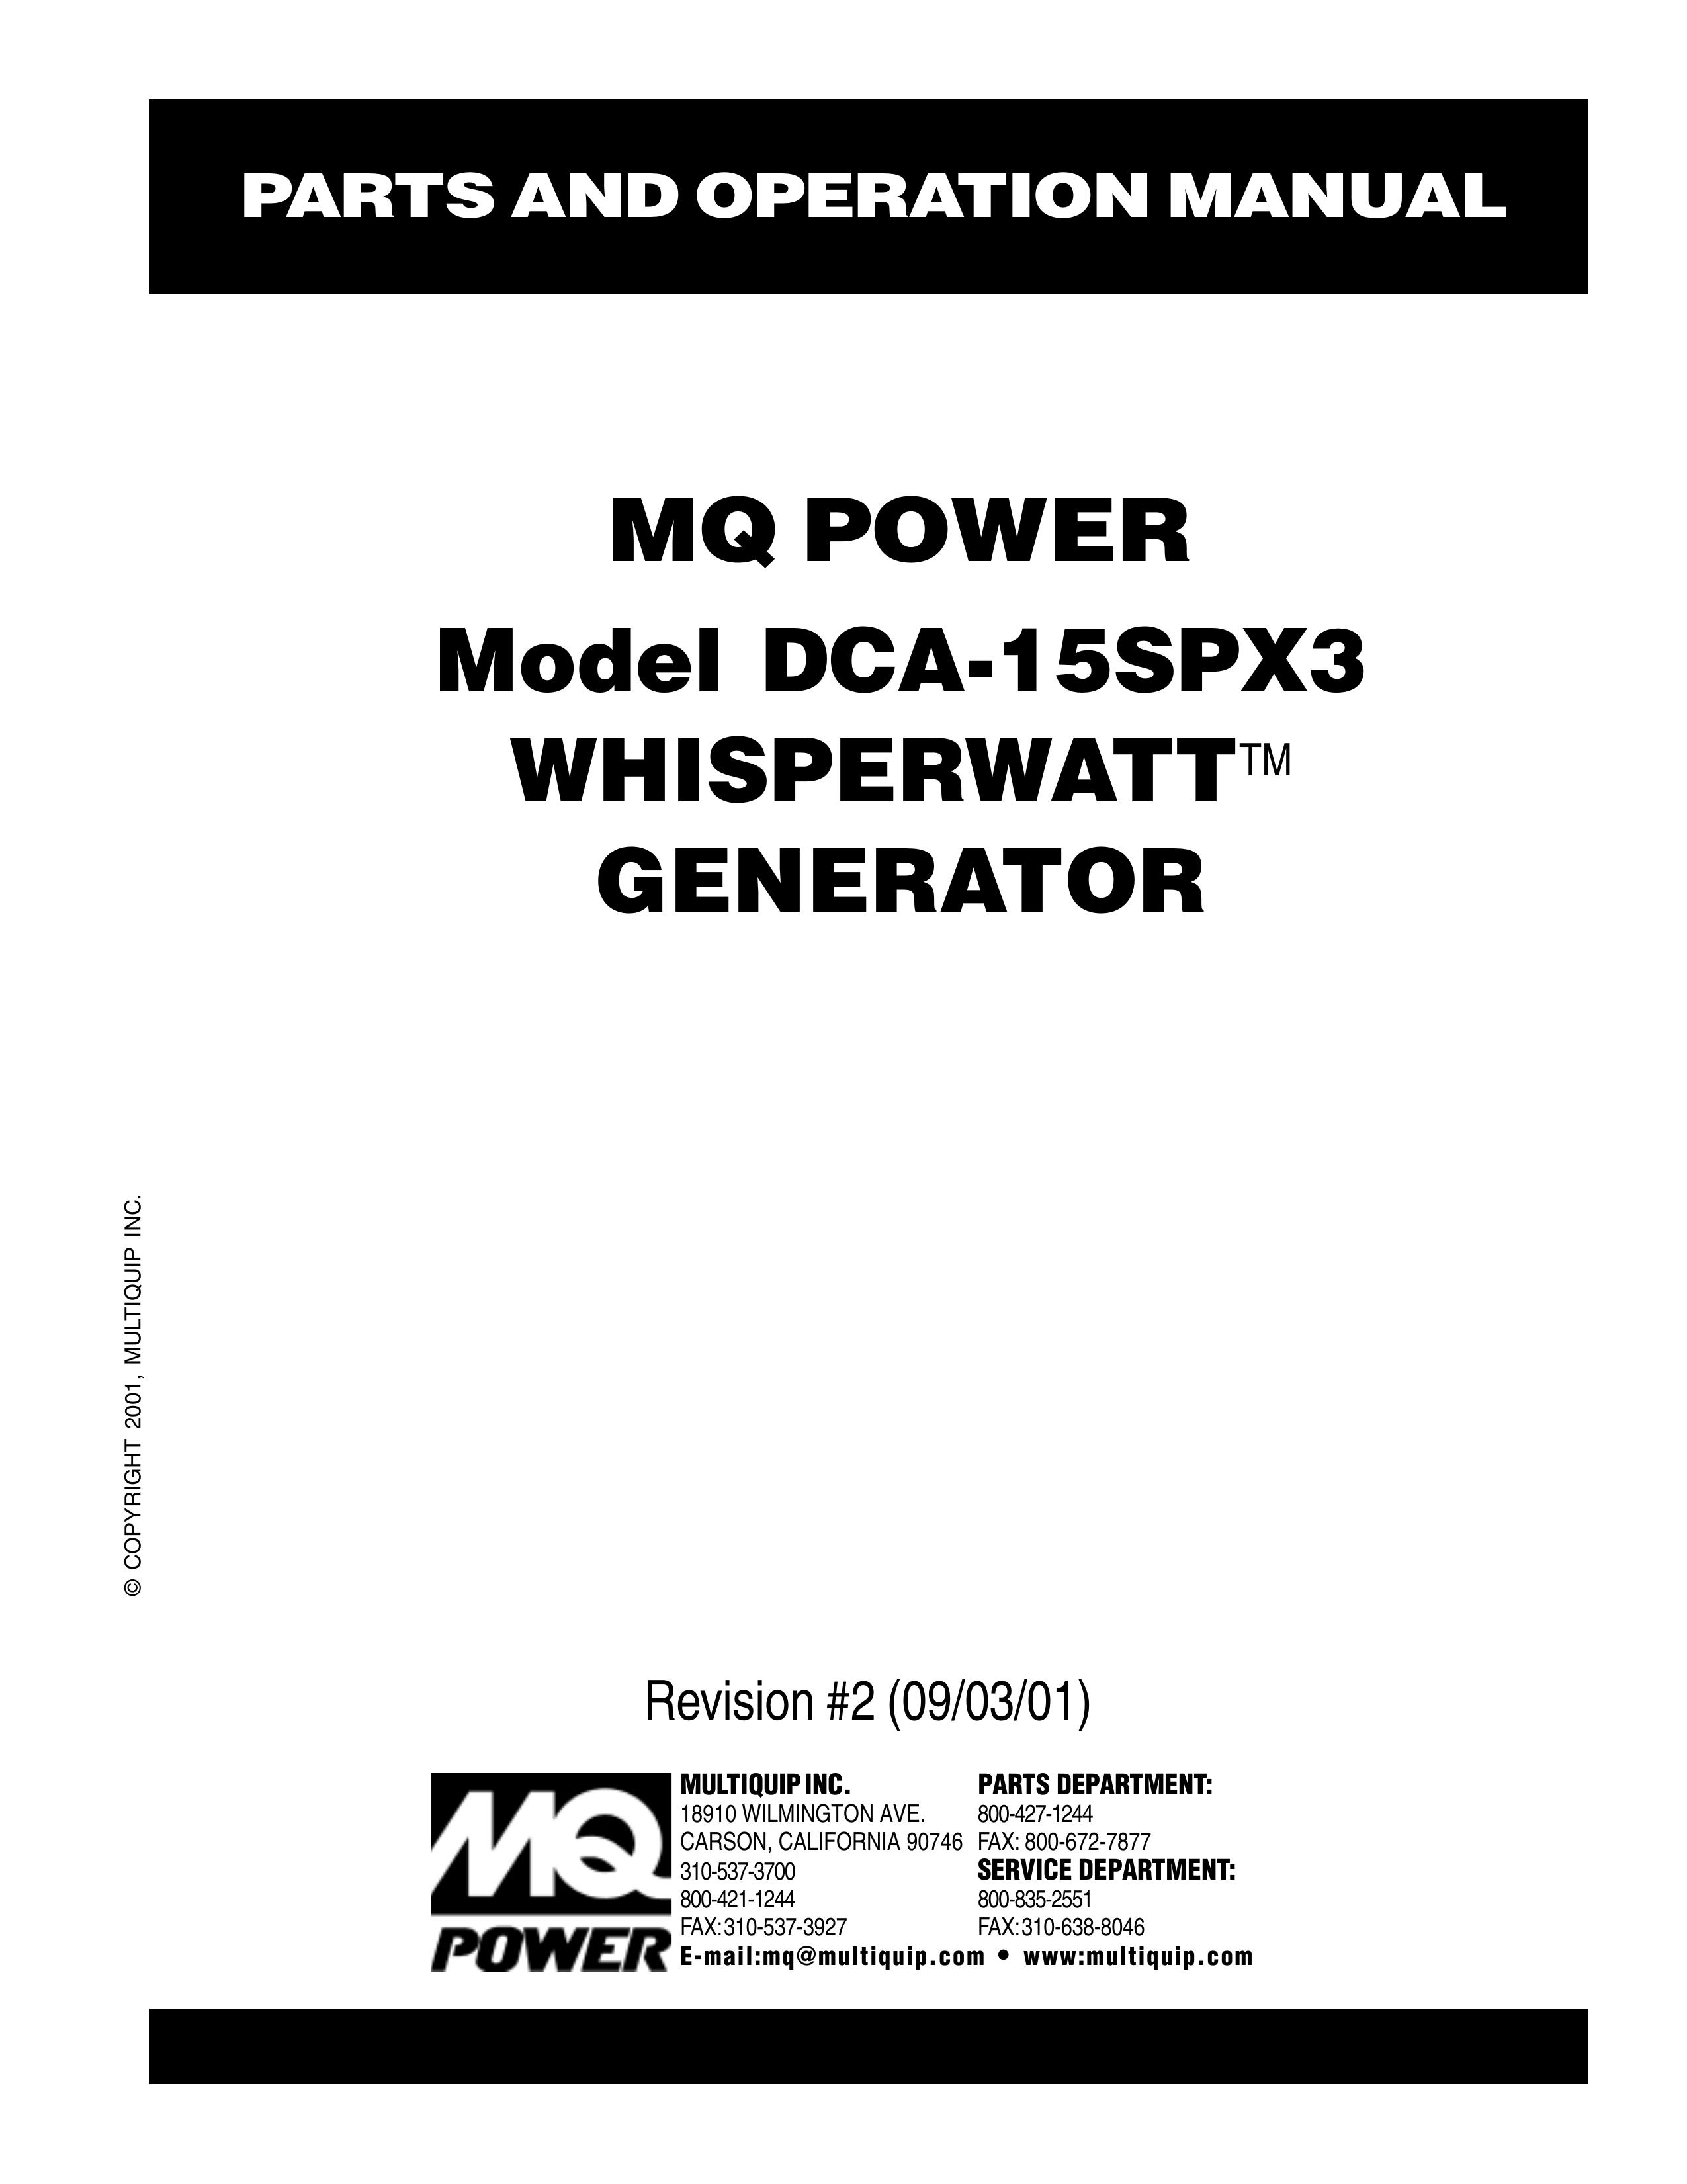 Multiquip DCA-15SPX3 Portable Generator User Manual